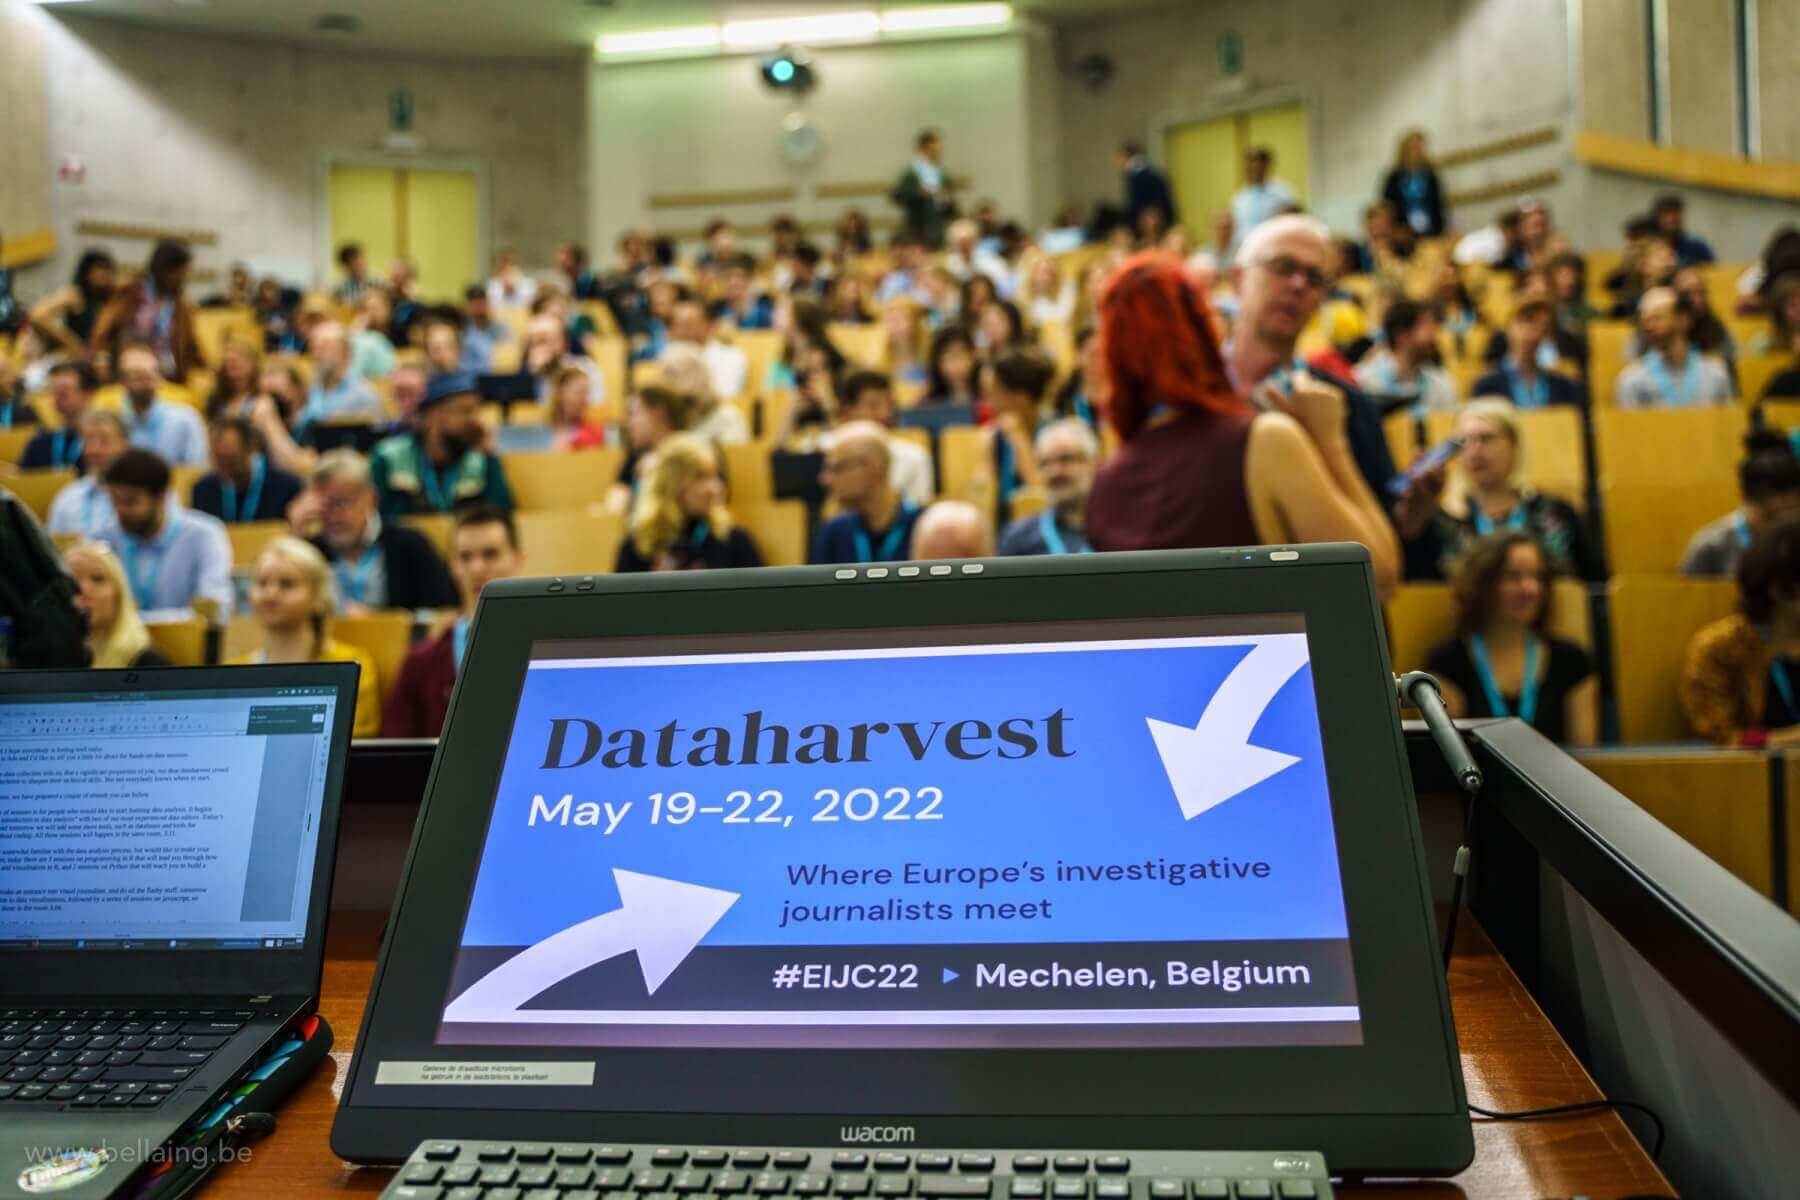 Dataharvest, May 19-22, 2022. Where Europe's investigative journalists meet.